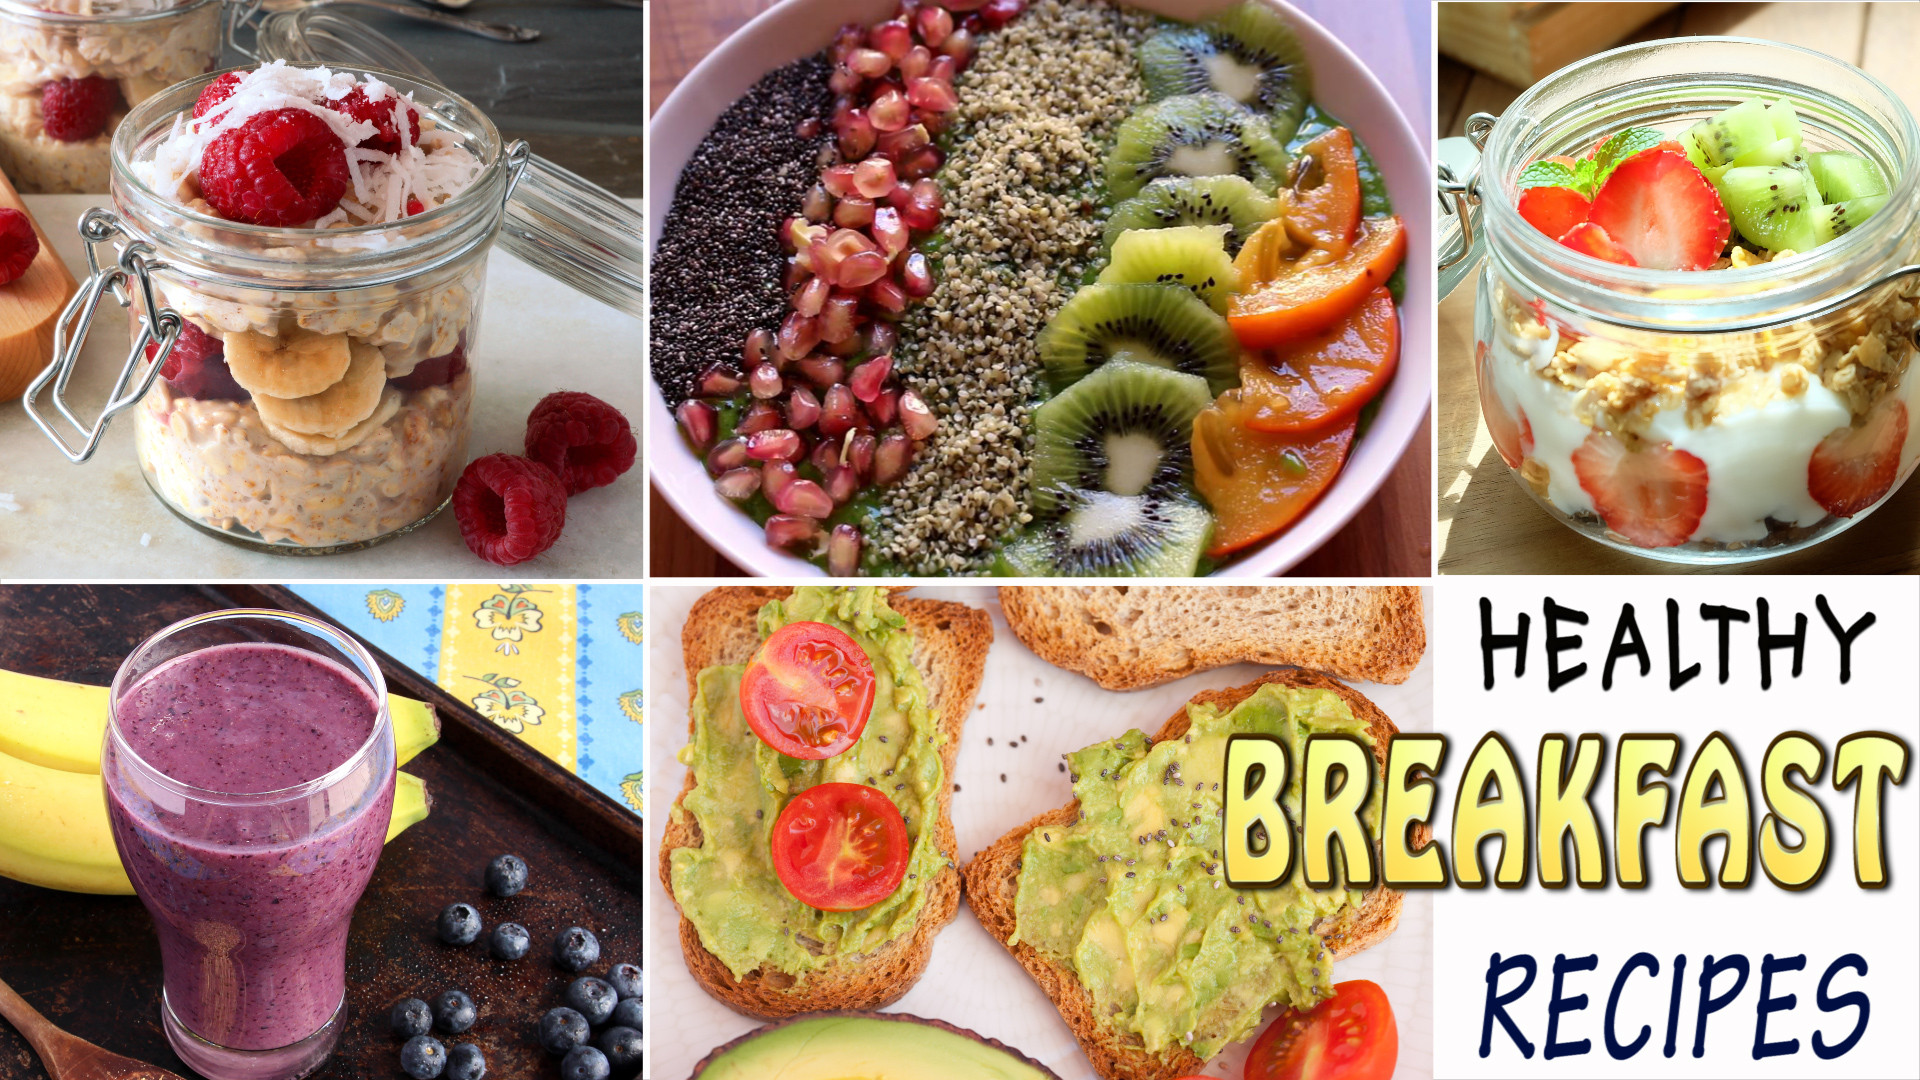 Favorite Vegan Recipes
 My 8 Favorite Healthy Vegan Breakfast Recipes